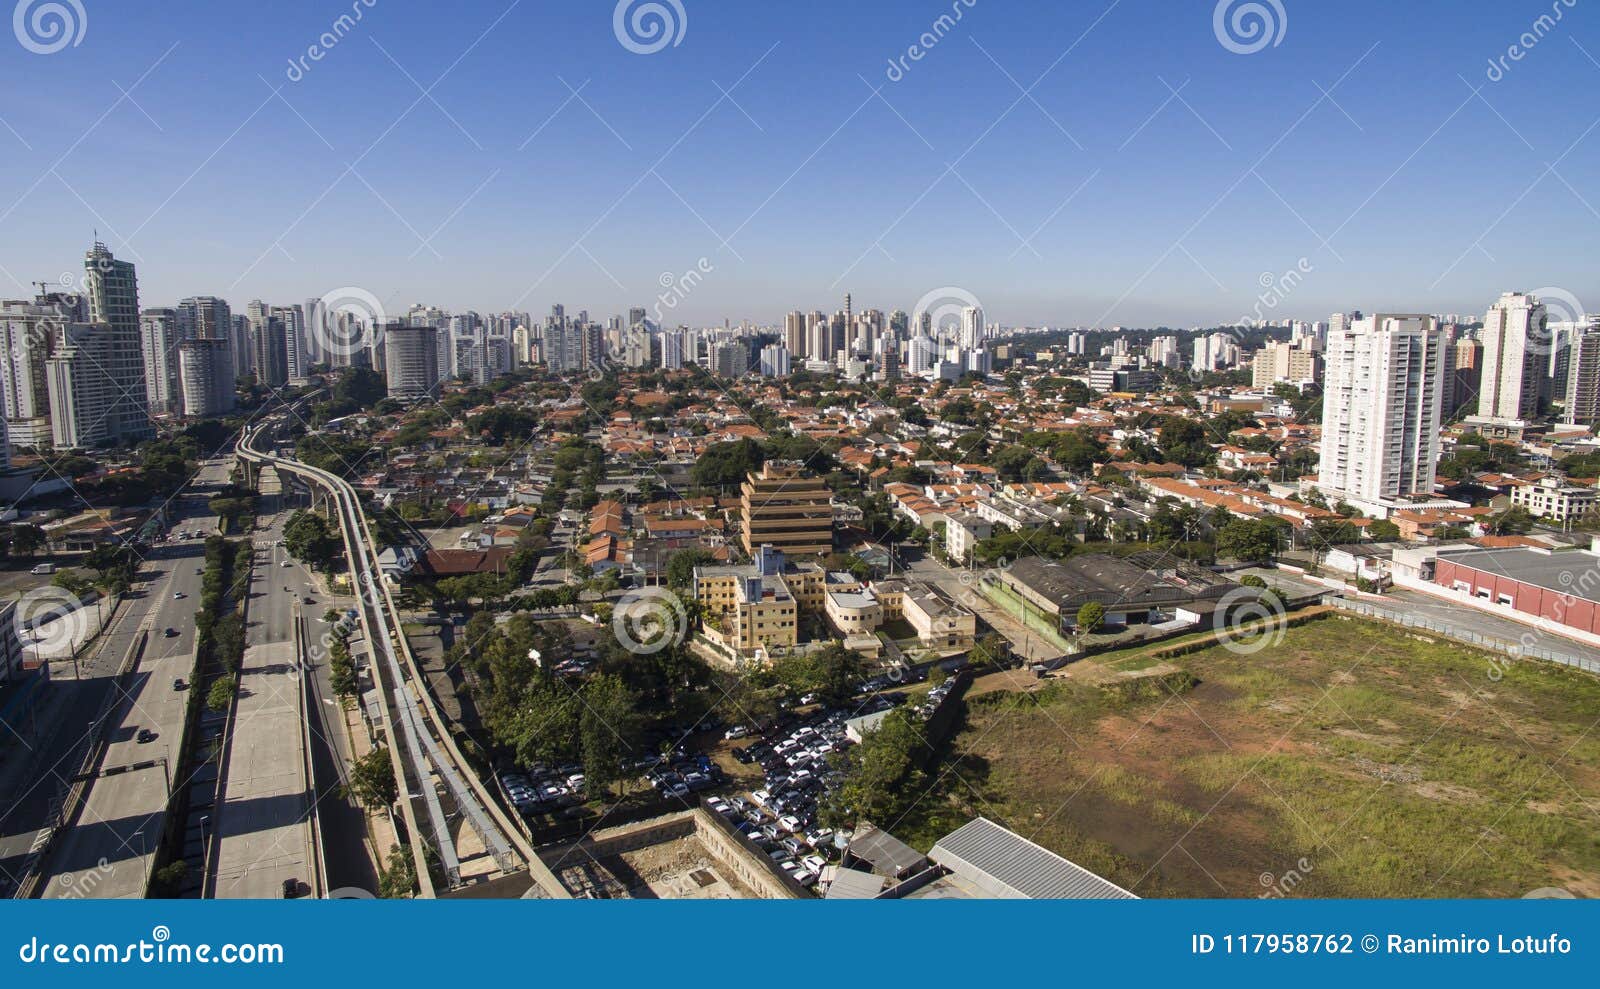 large avenues, avenue journalist roberto marinho, sao paulo brazil